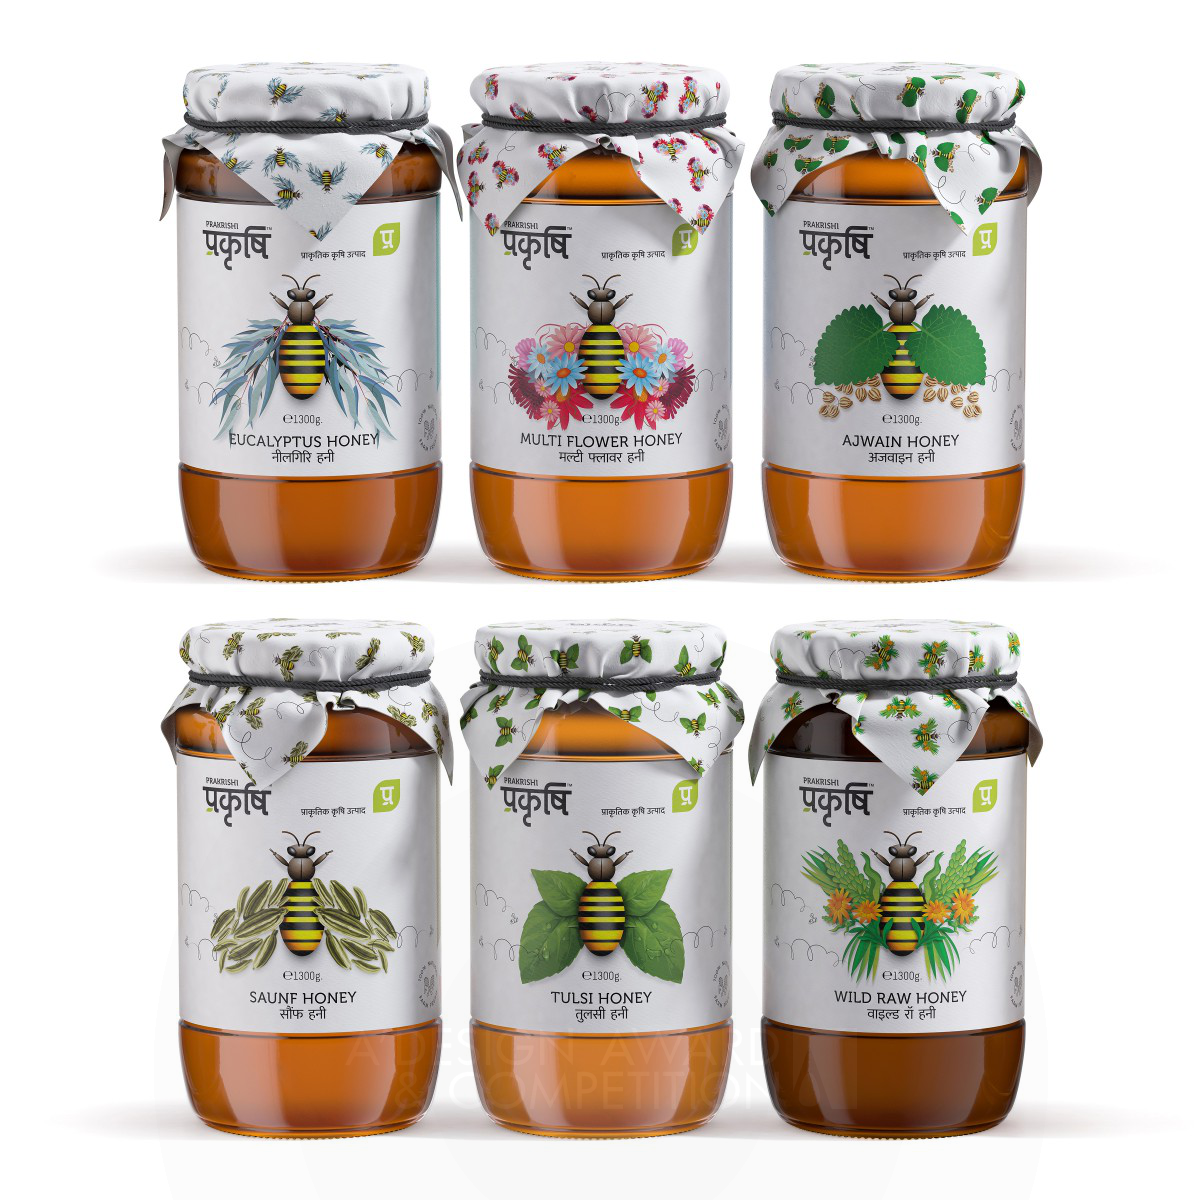 Prakrishi Honey Packaging by Vishal Vora